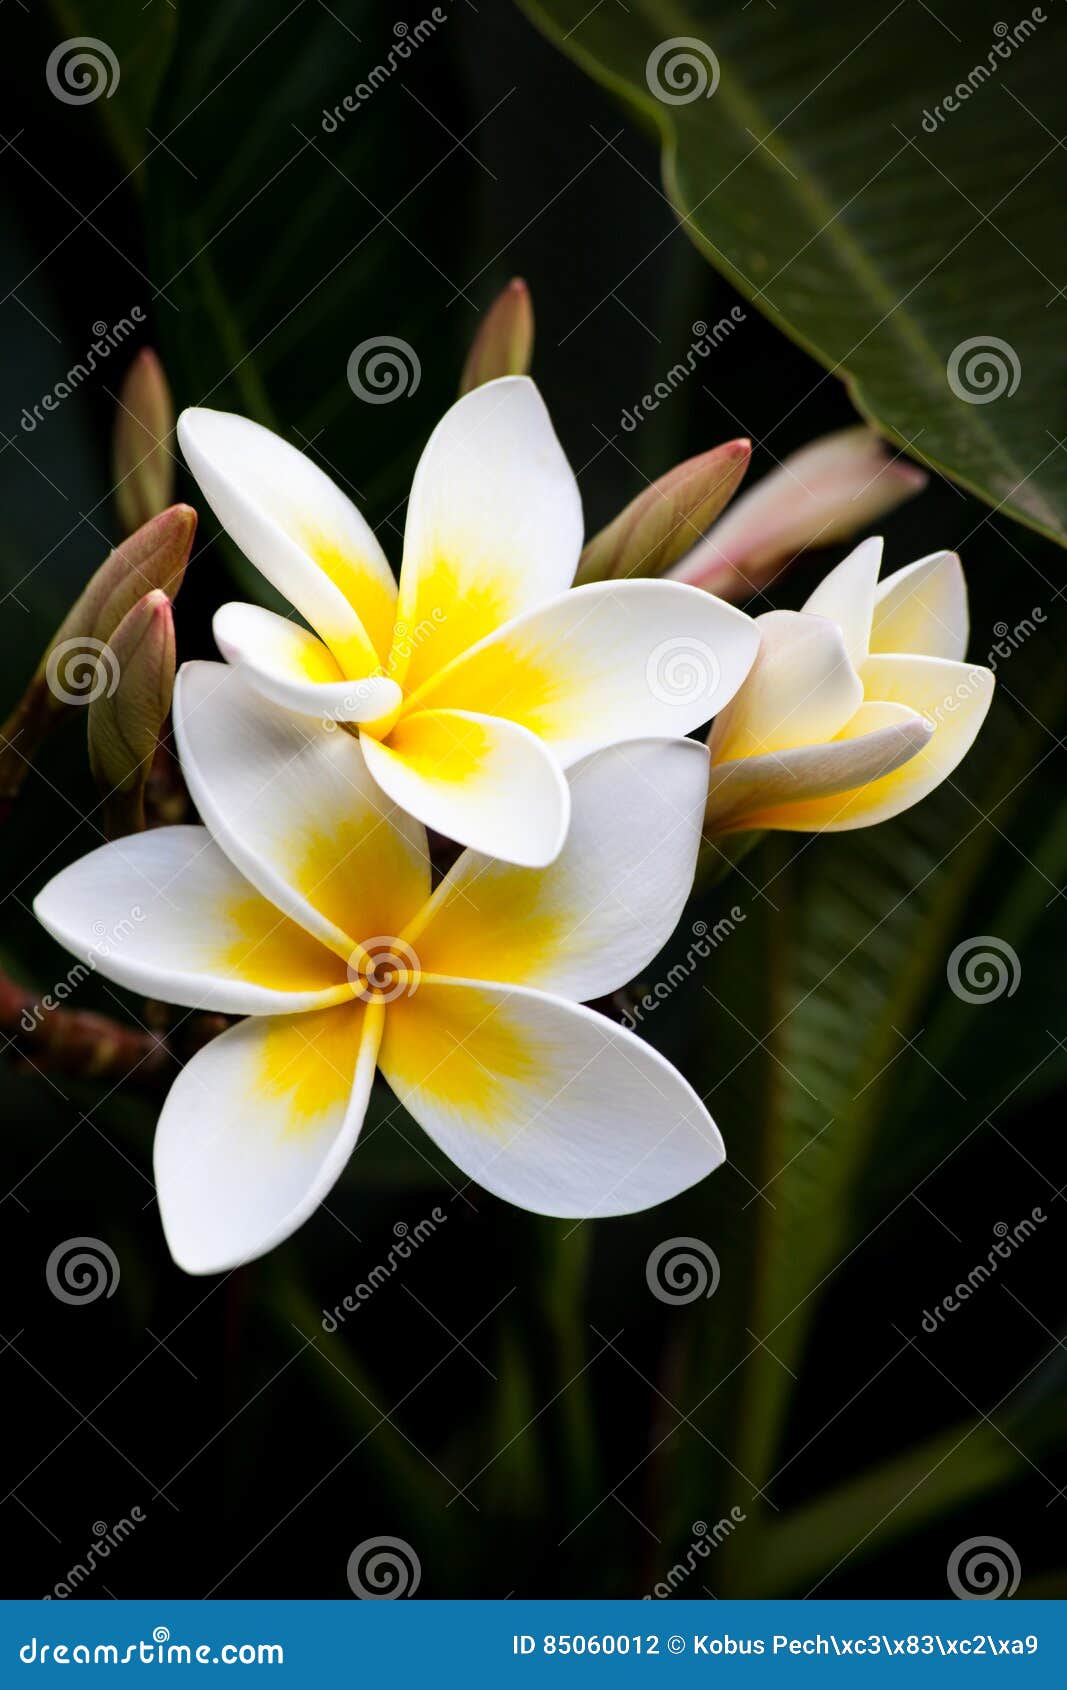 frangipani flowers